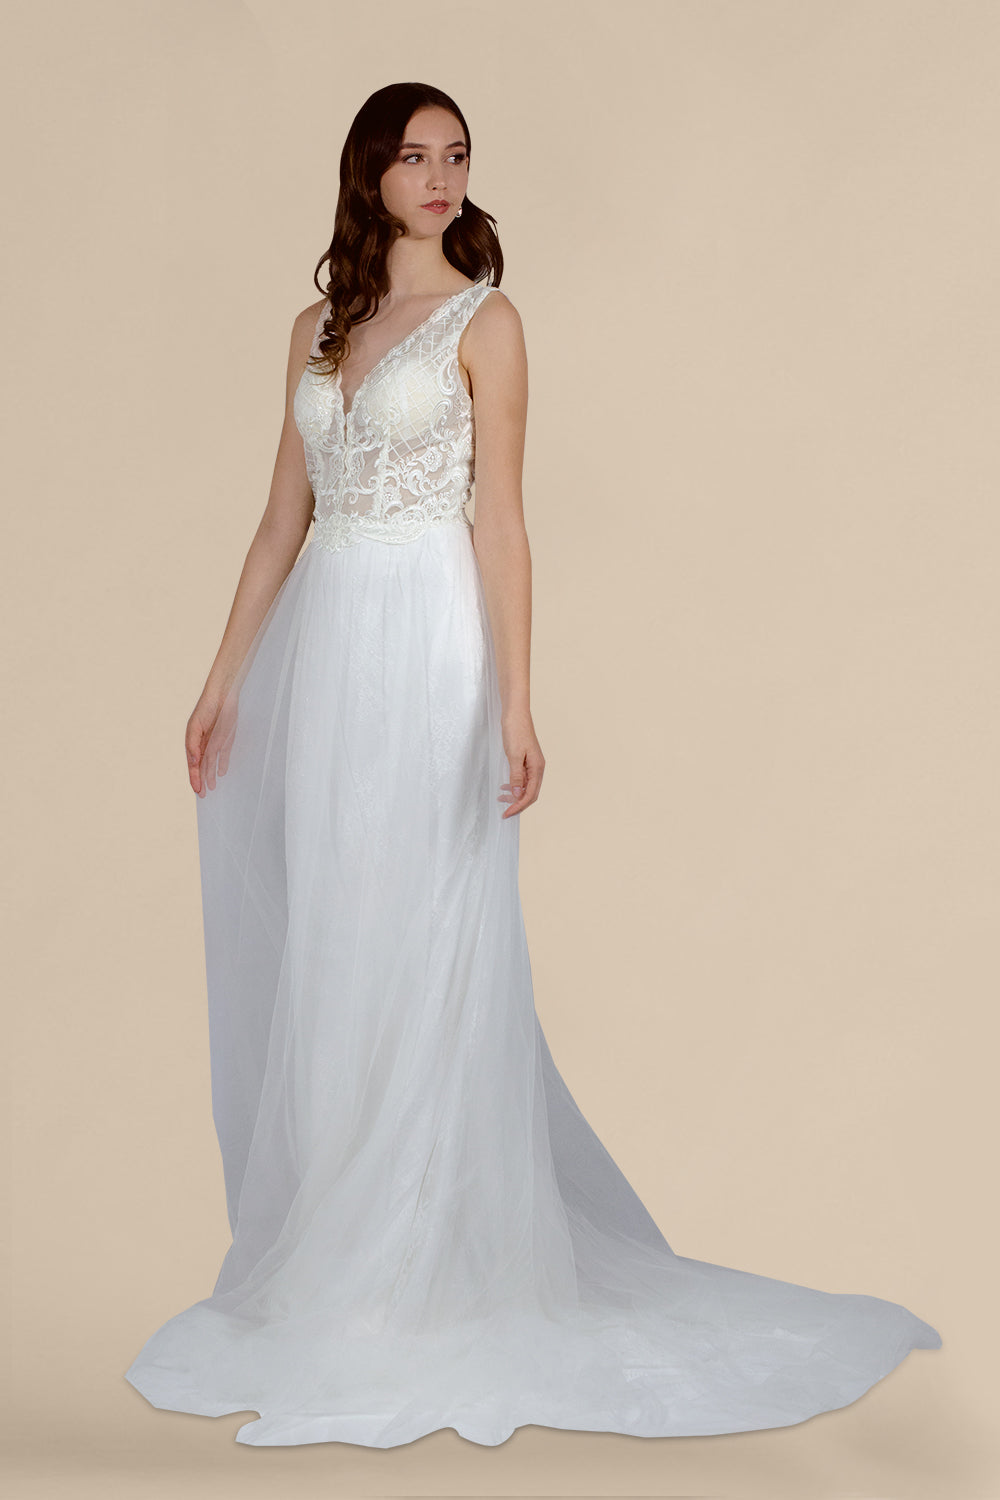 custom boho wedding gowns perth australia online envius bridal & formal